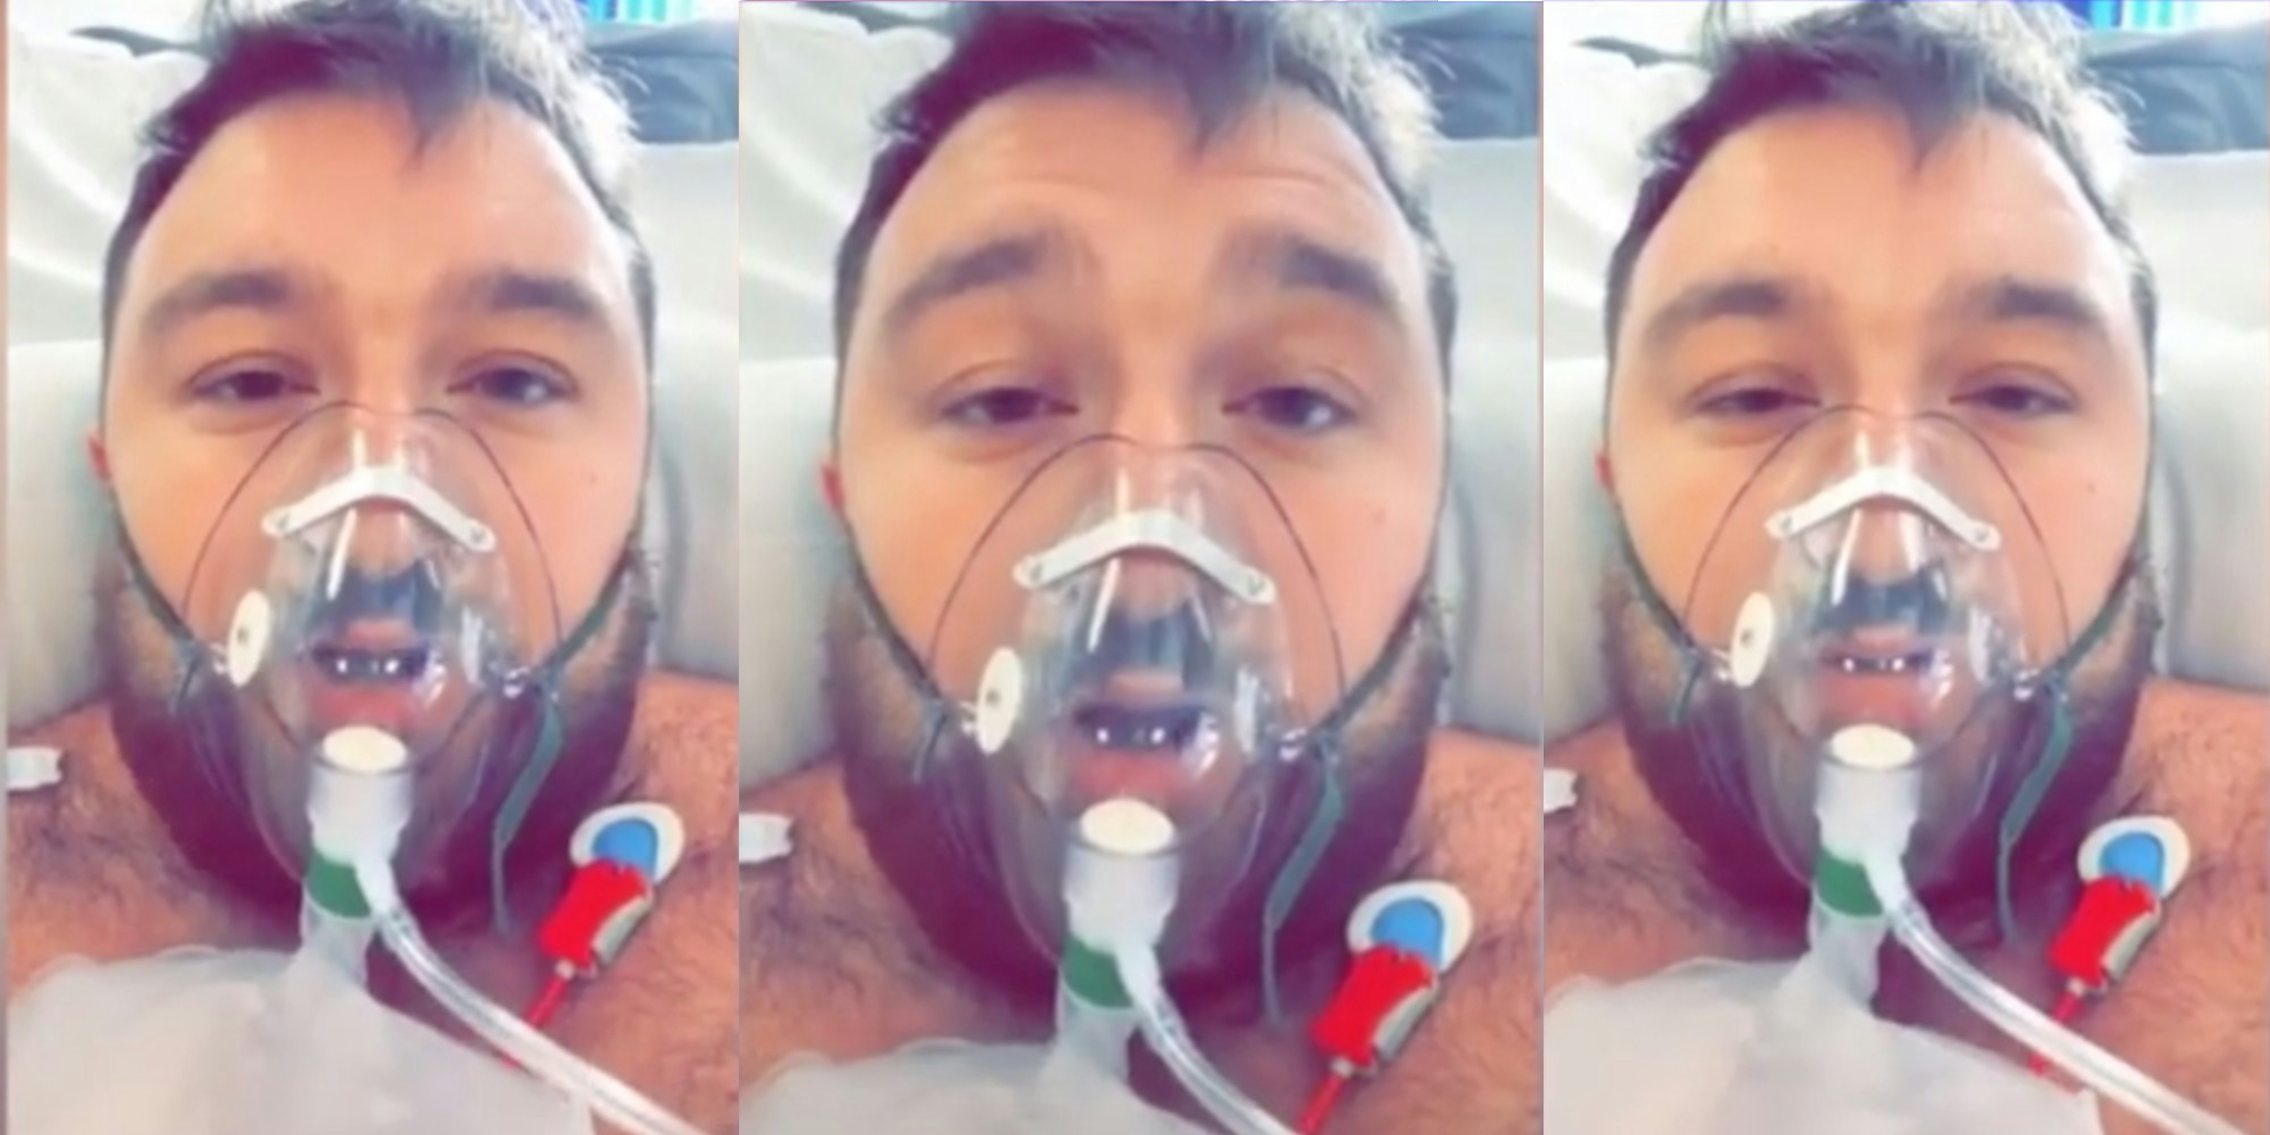 a man wearing an oxygen mask in a hospital